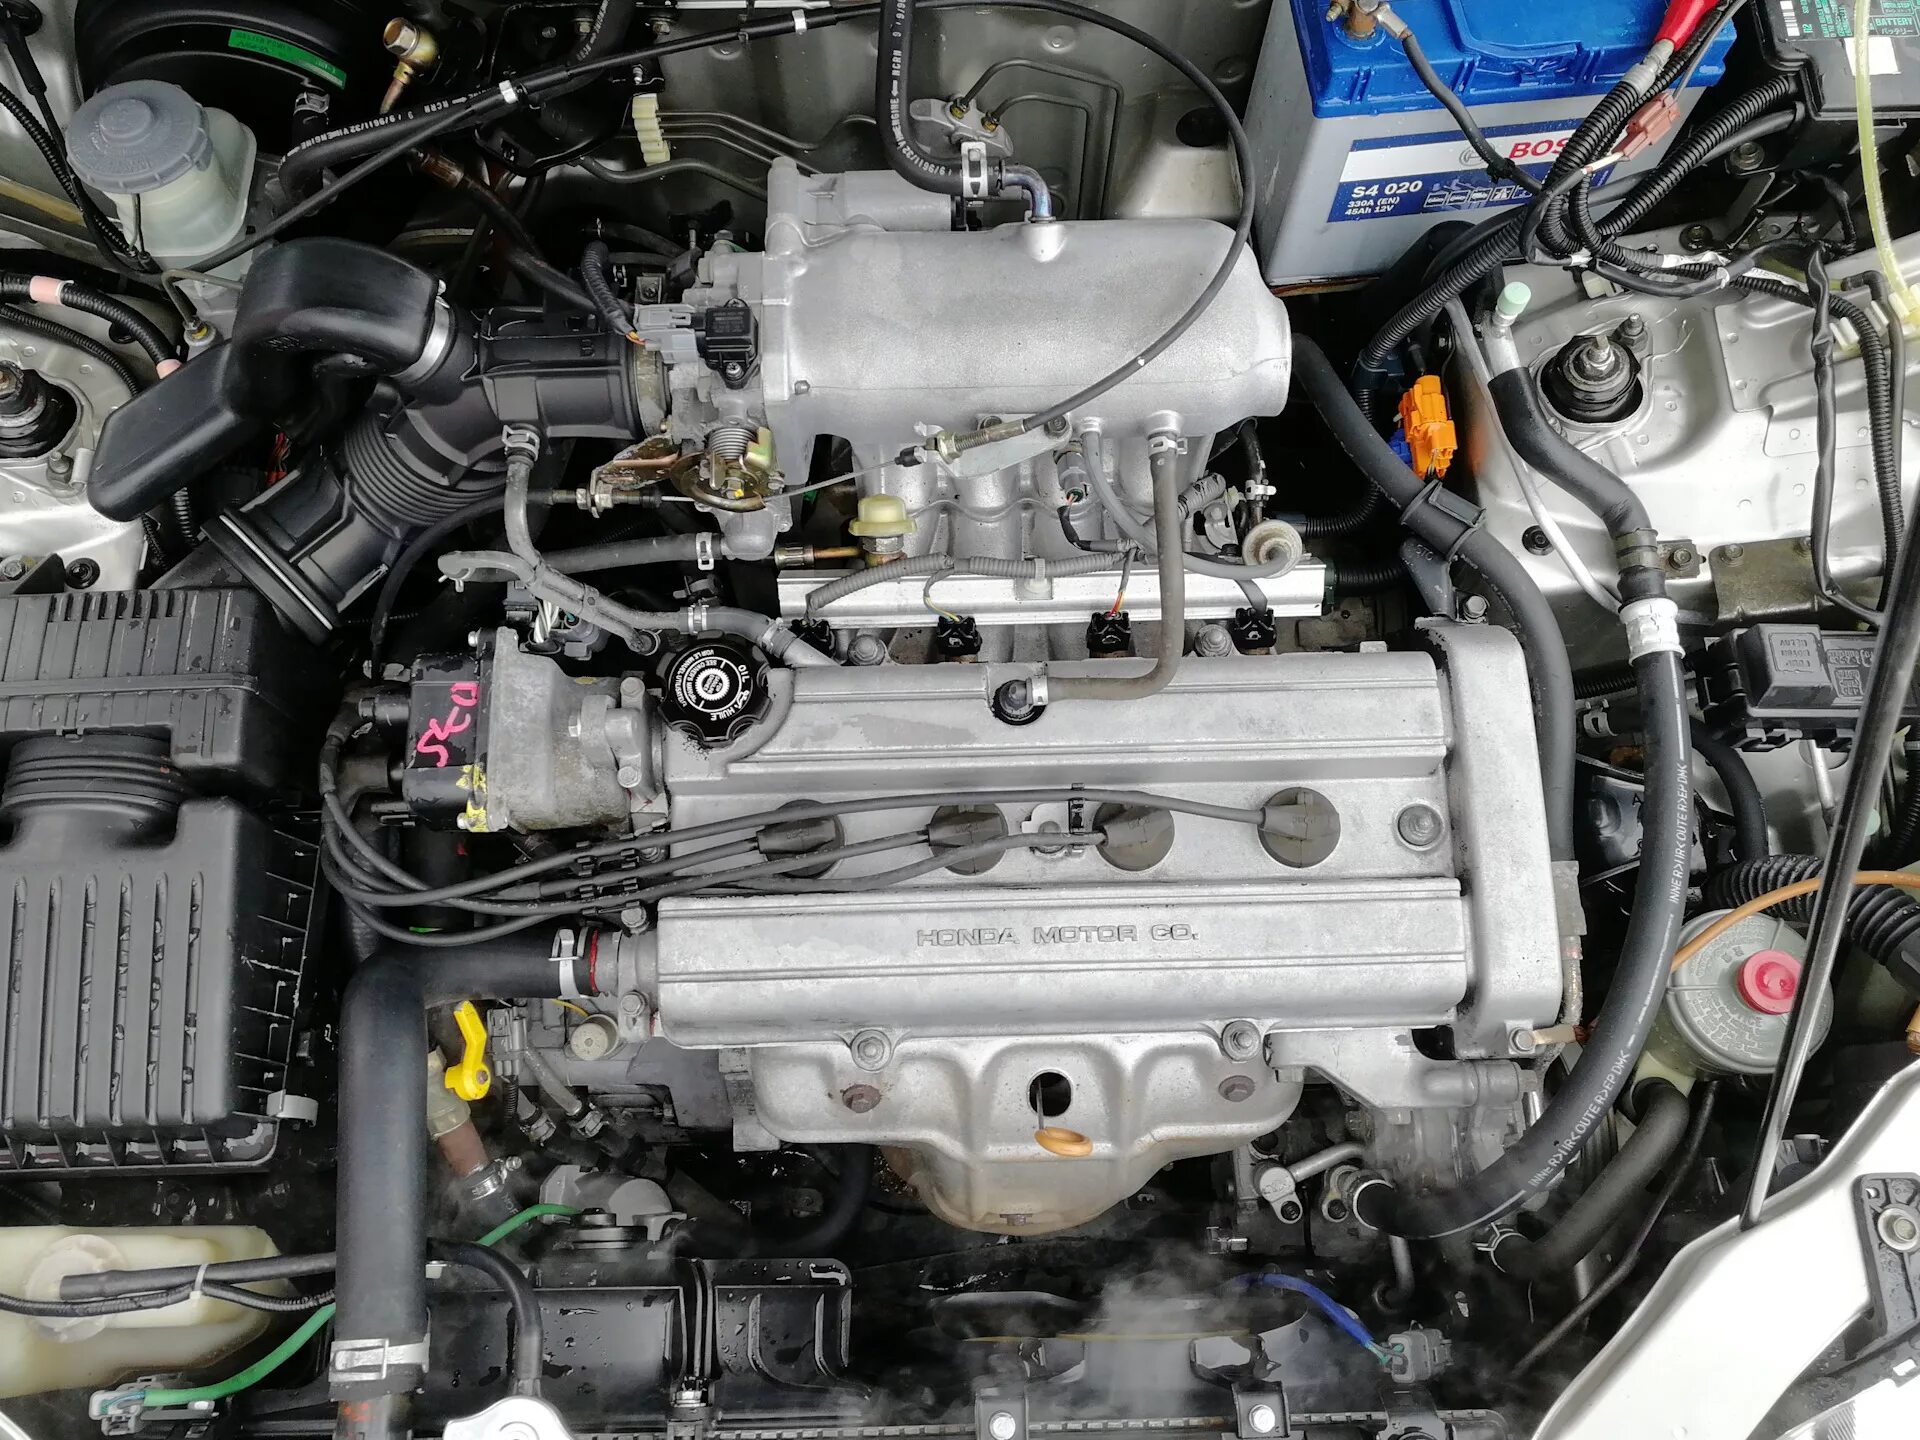 Двигатели хонда срв 2 поколения. Мотор v20 Honda CR-V. Honda CRV rd1 мотор. Мотор Хонда CRV 2.0. Двигатель Хонда ЦРВ РД 1.